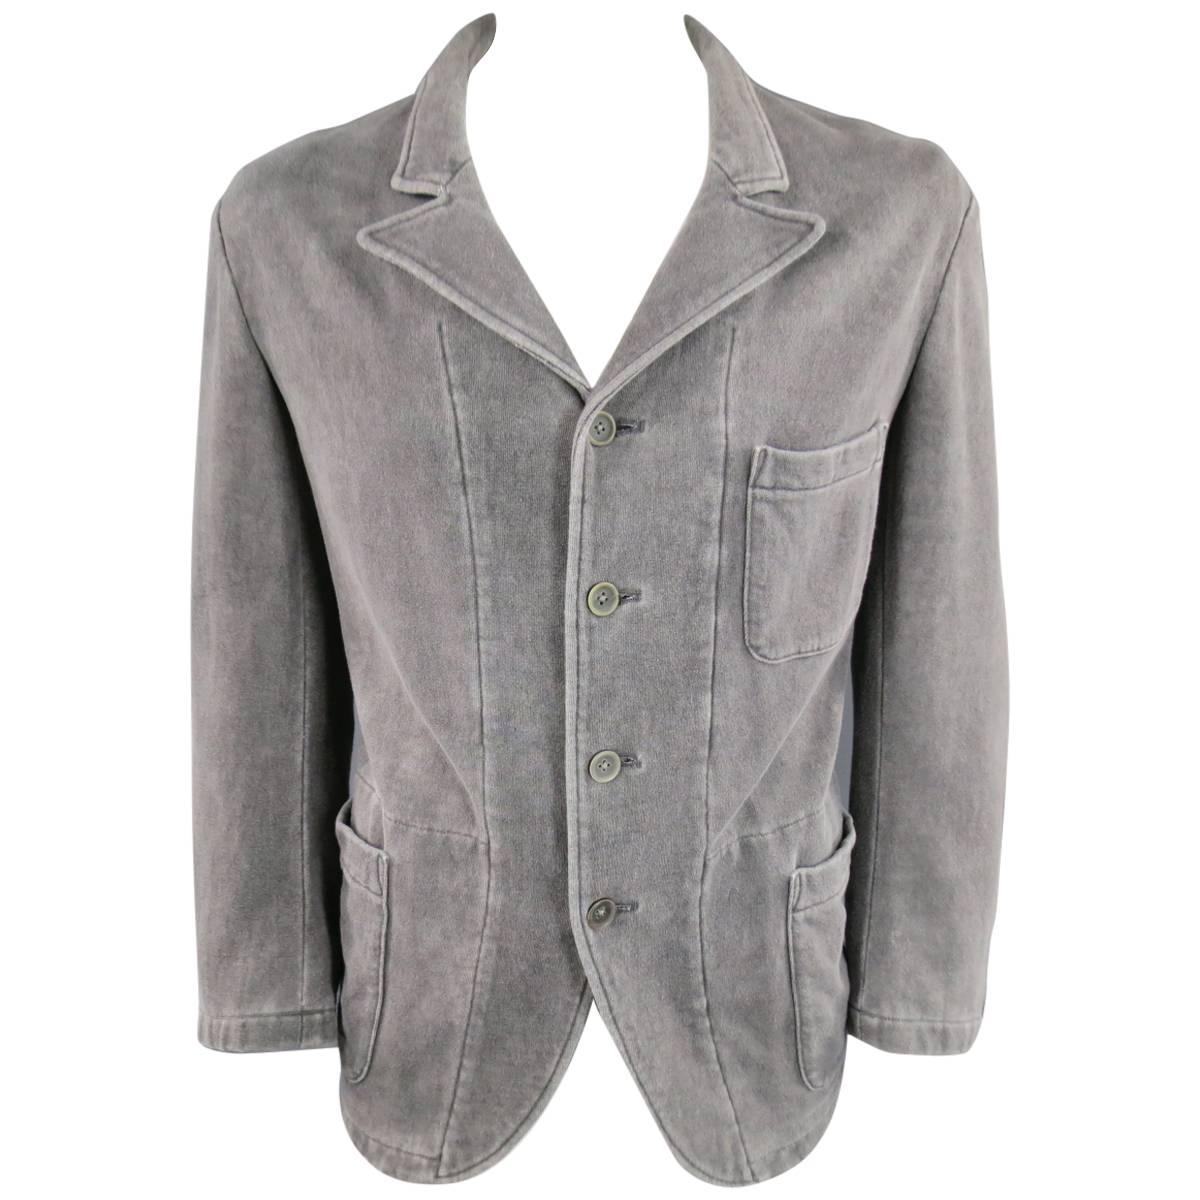 Yohji Yamamoto Men's Jacket 42 Gray Cotton Jersey Pointed Lapel Sport Coat